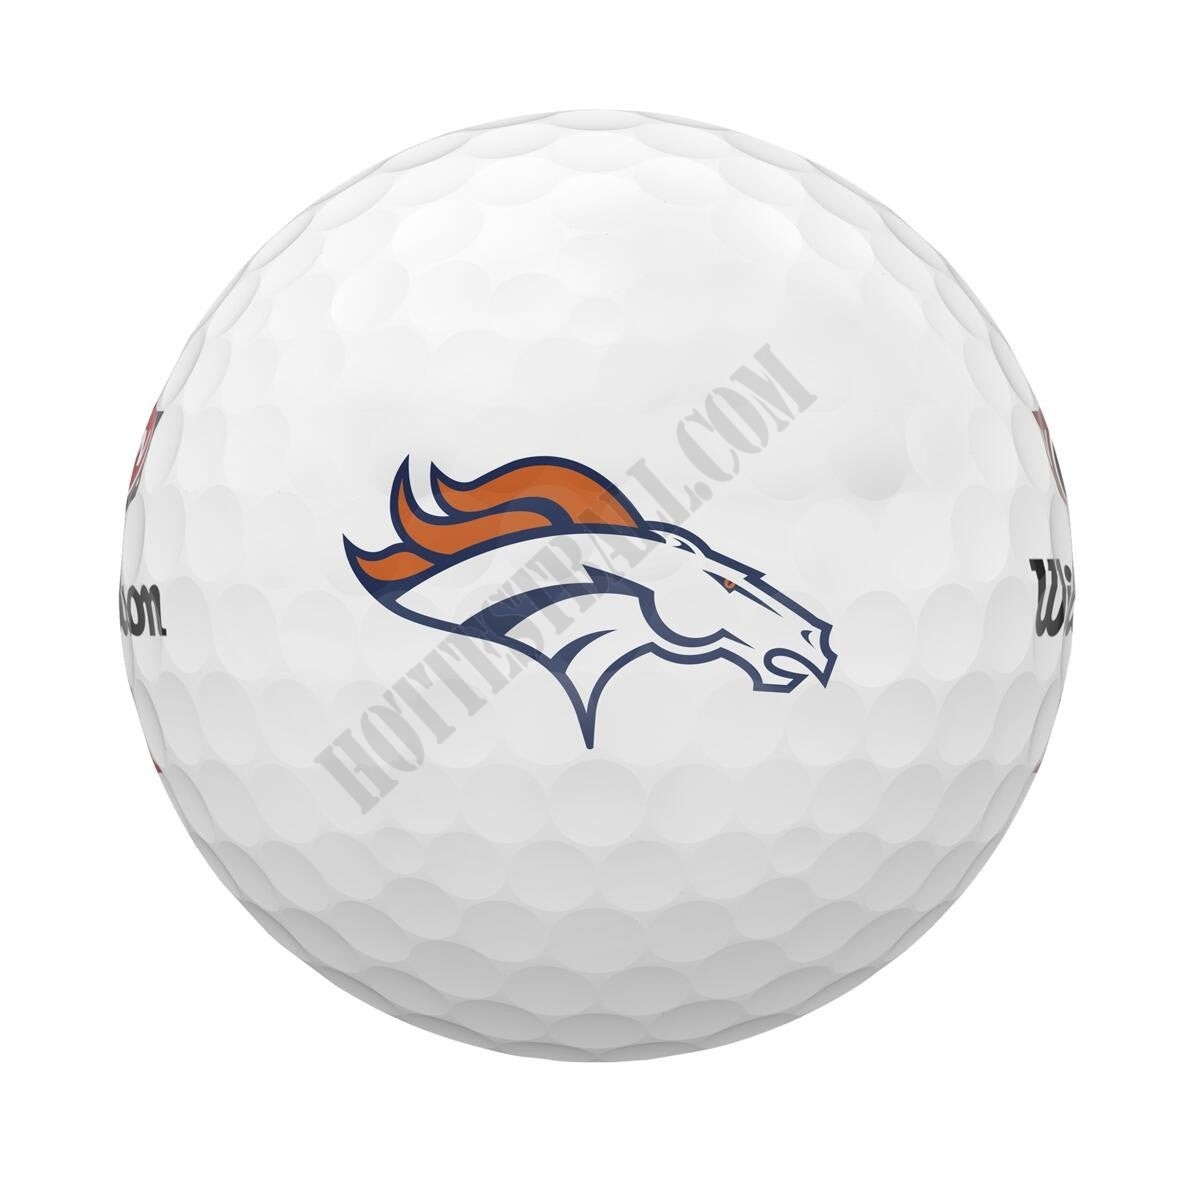 Duo Soft+ NFL Golf Balls - Denver Broncos ● Wilson Promotions - -1